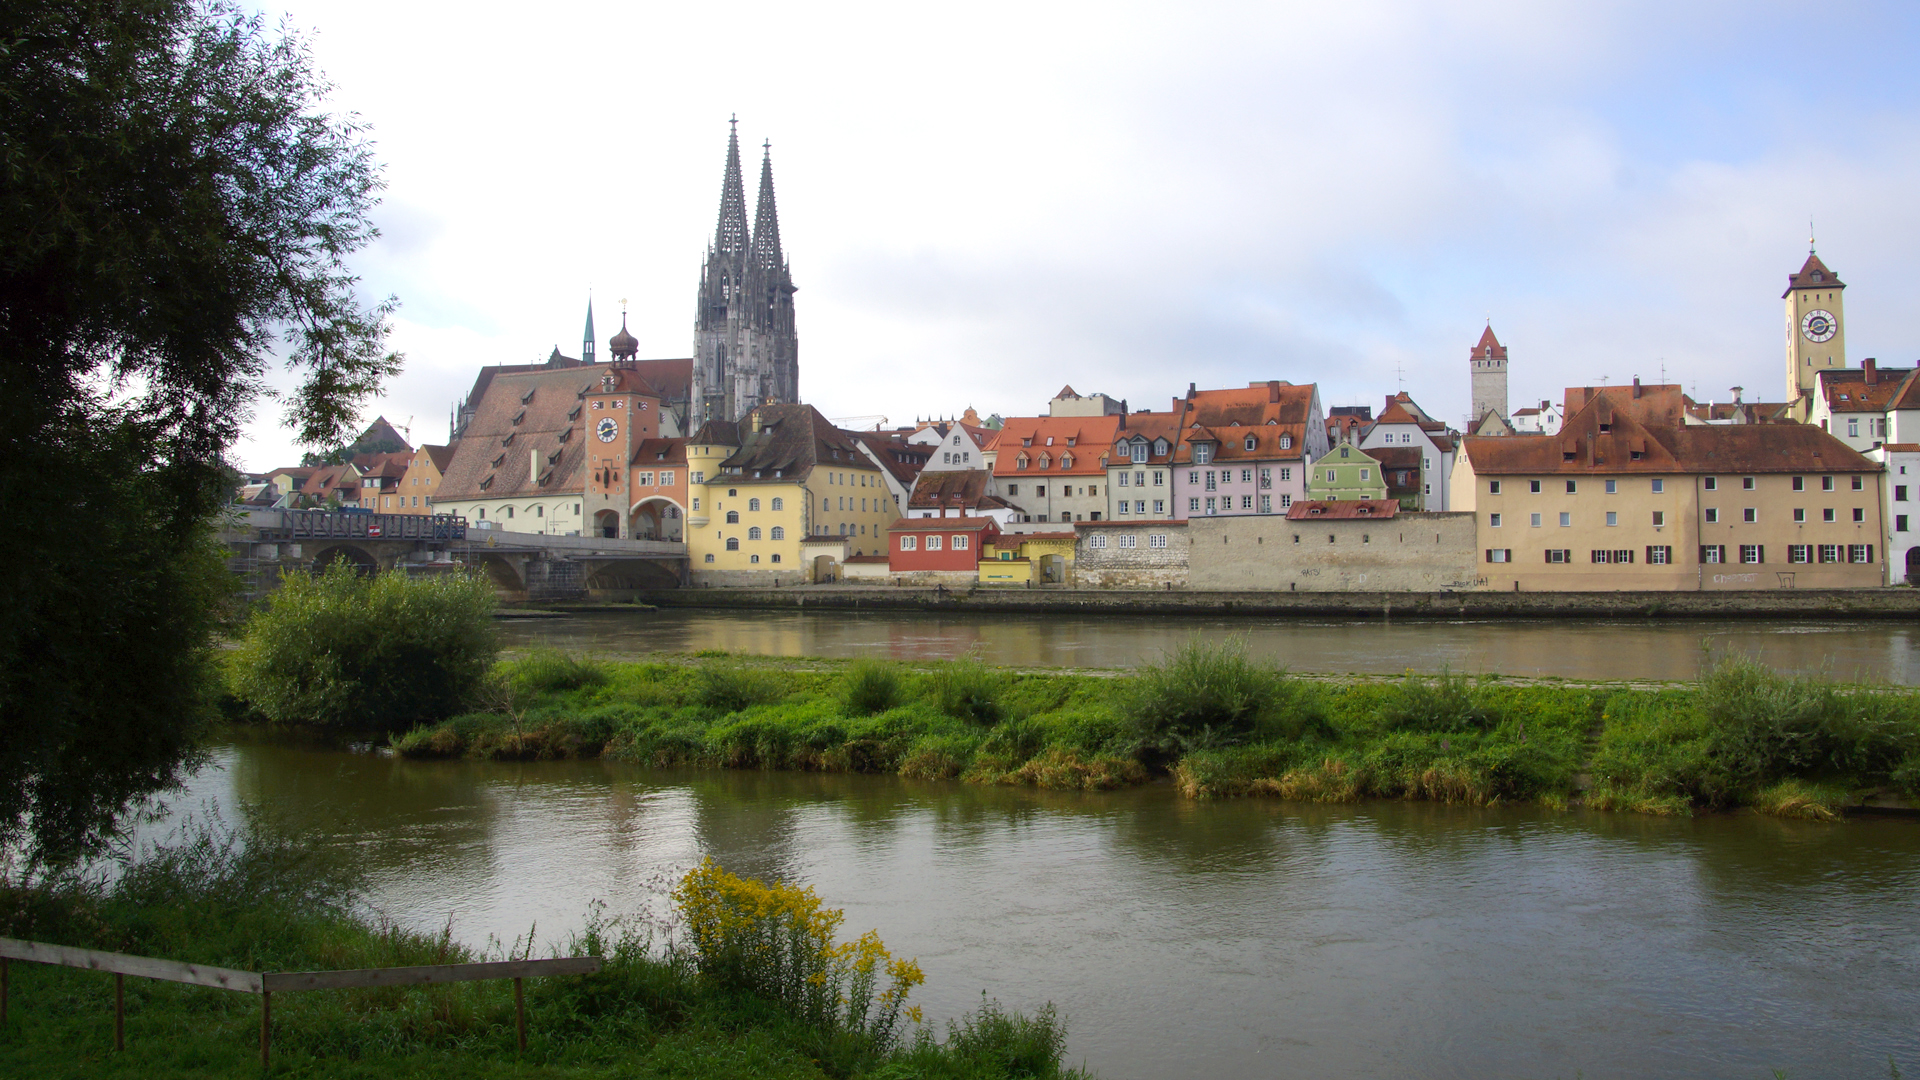 Regensburg 1